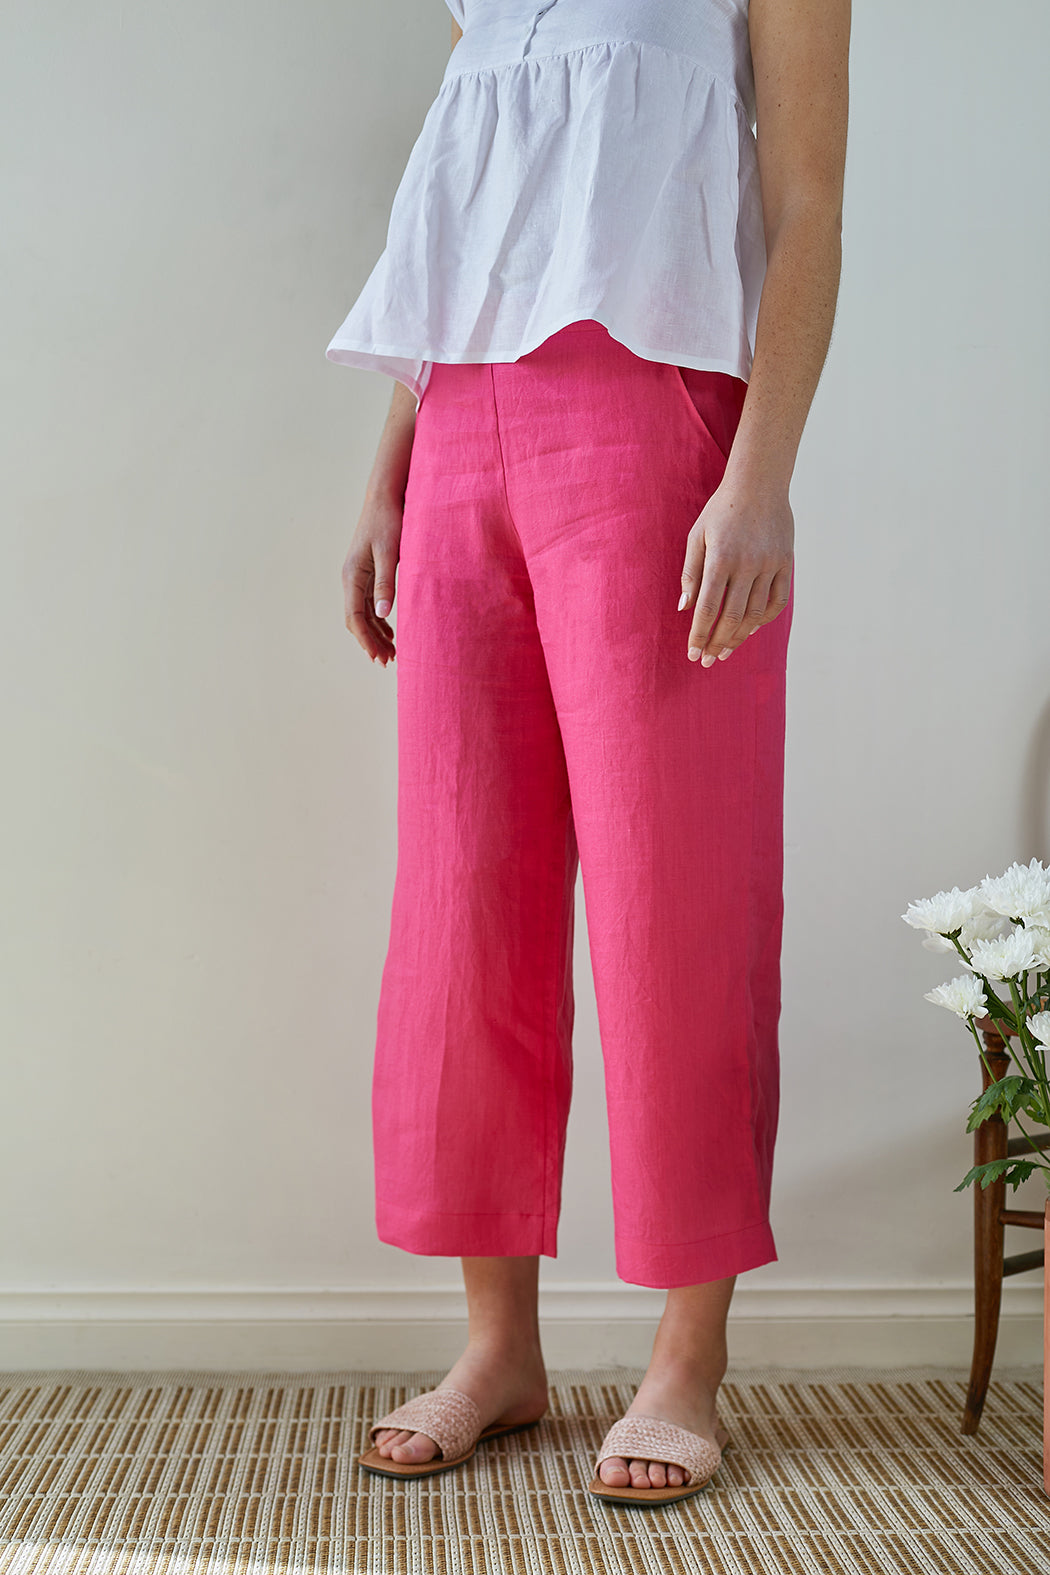 Holly Hock Pants - Pink